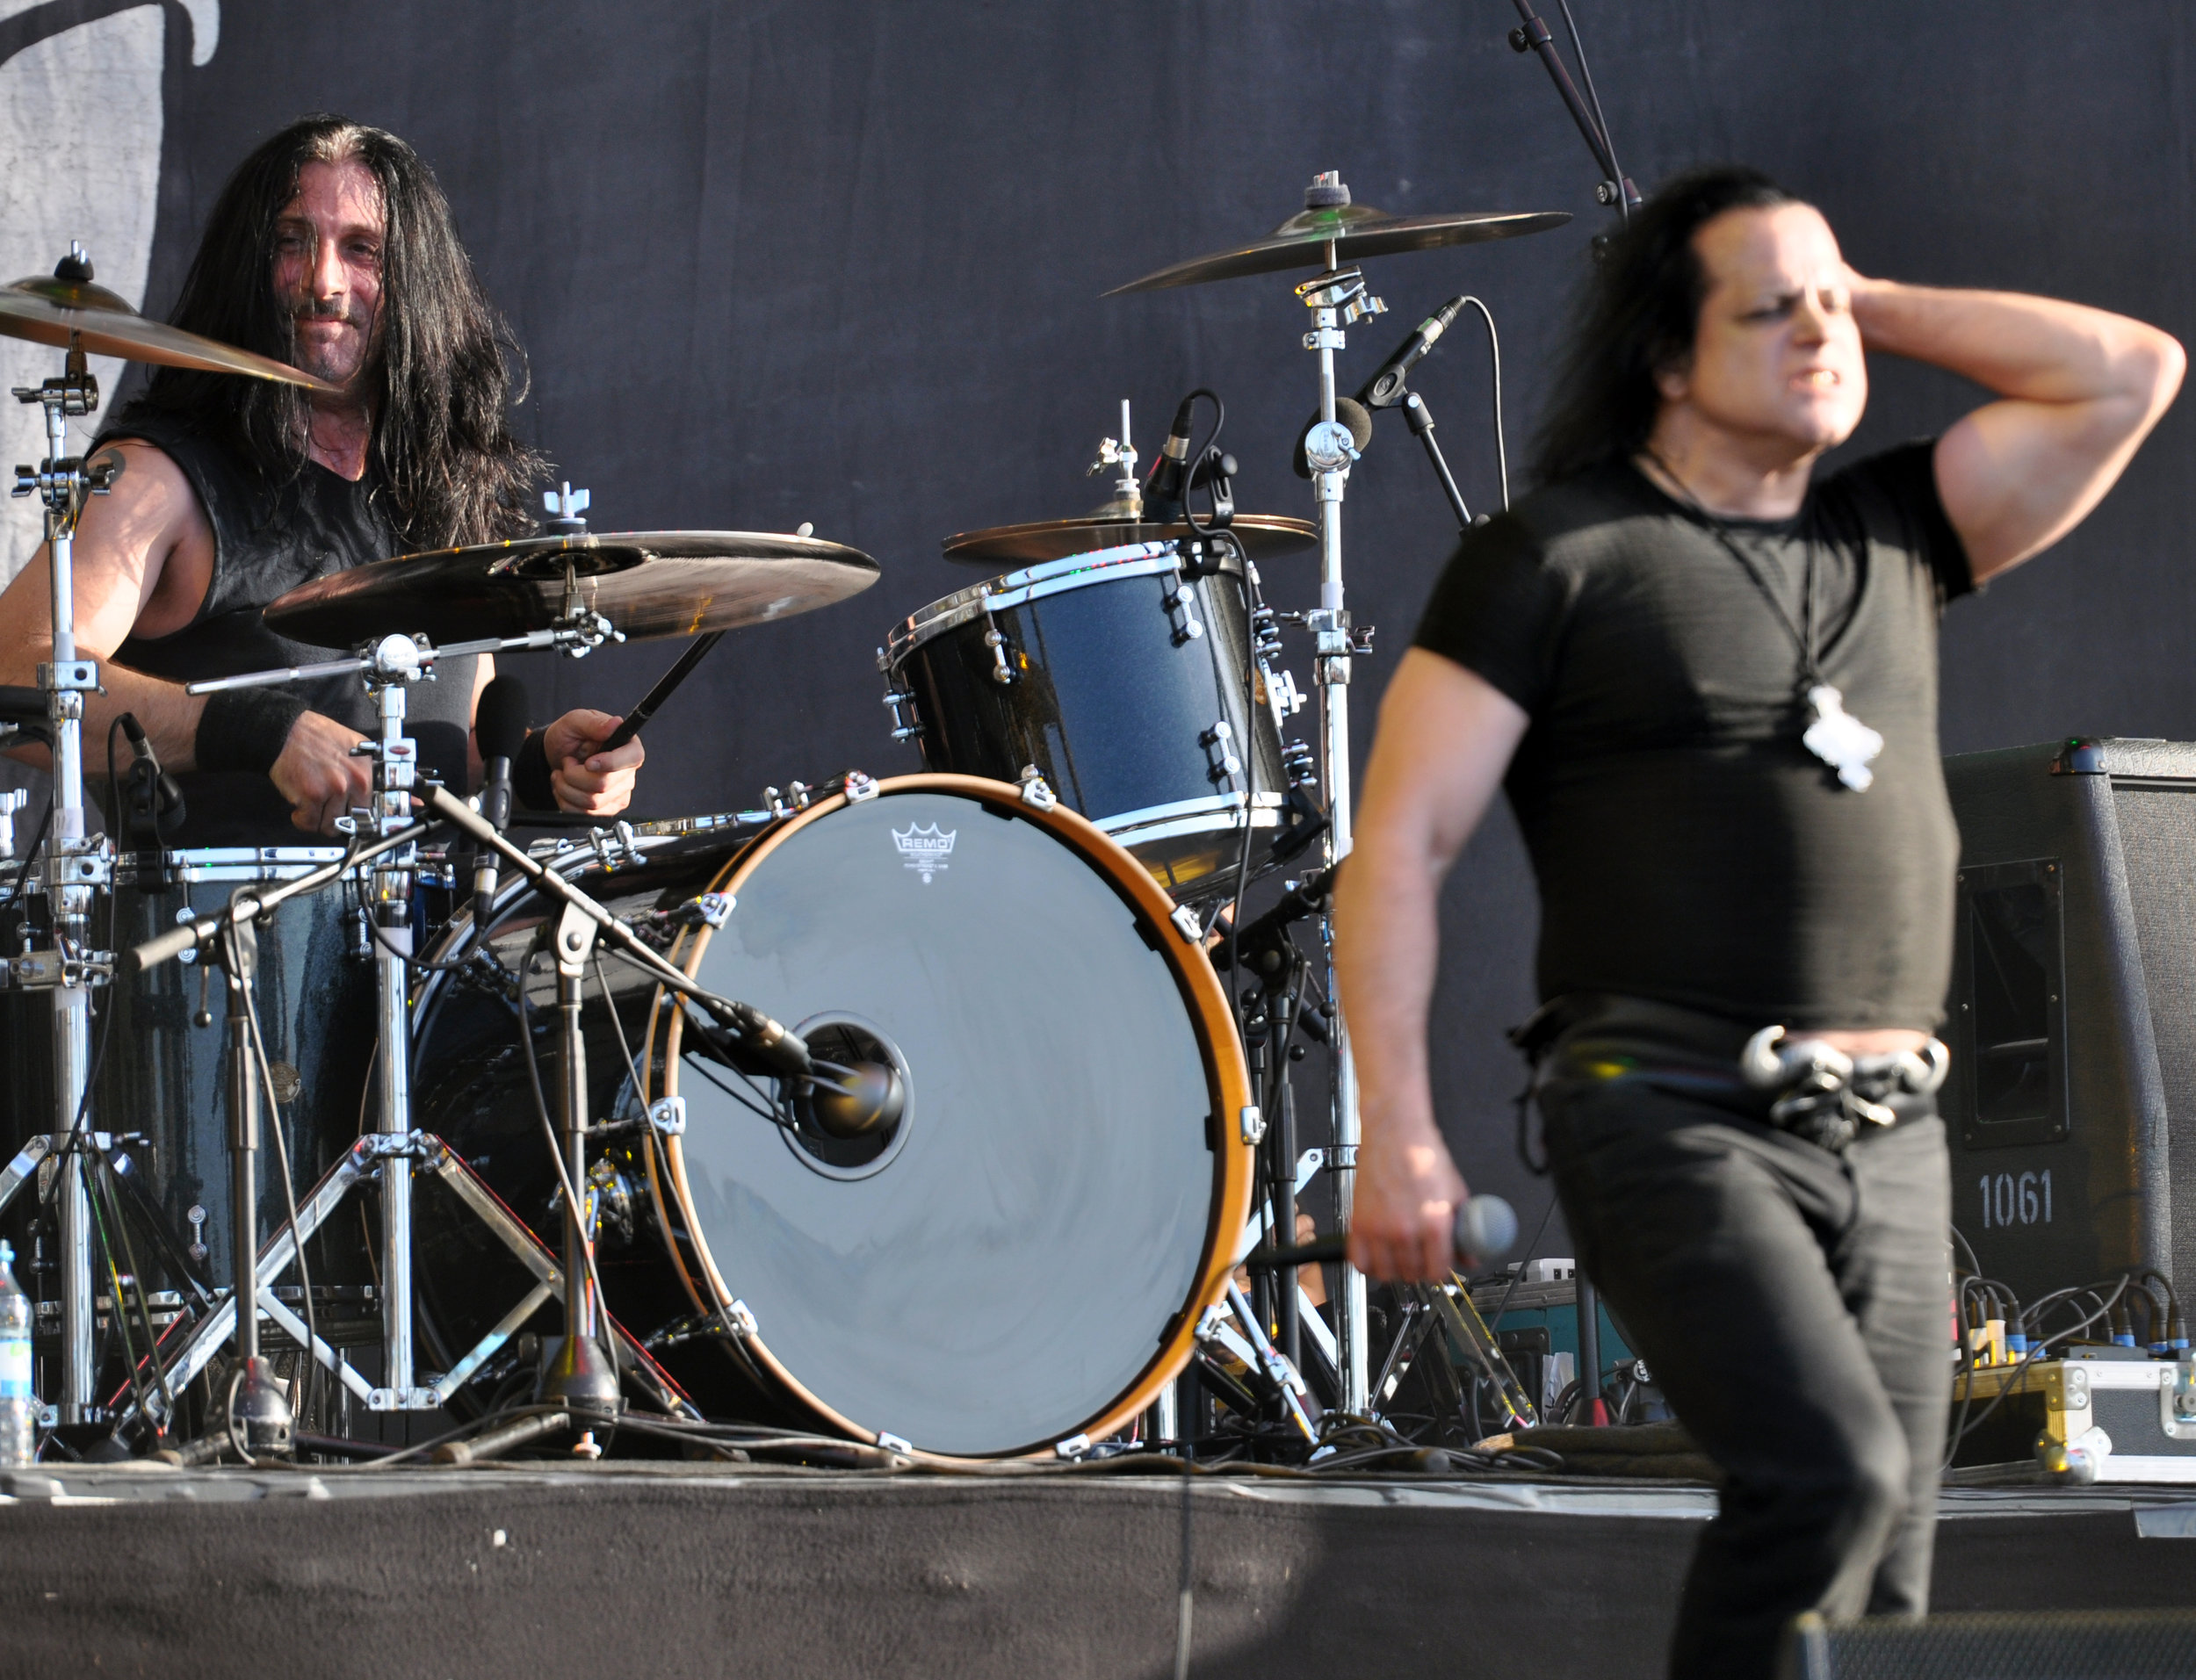 Johnny_Kelly_and_Glenn_Danzig_at_Wacken_Open_Air_2013.jpg